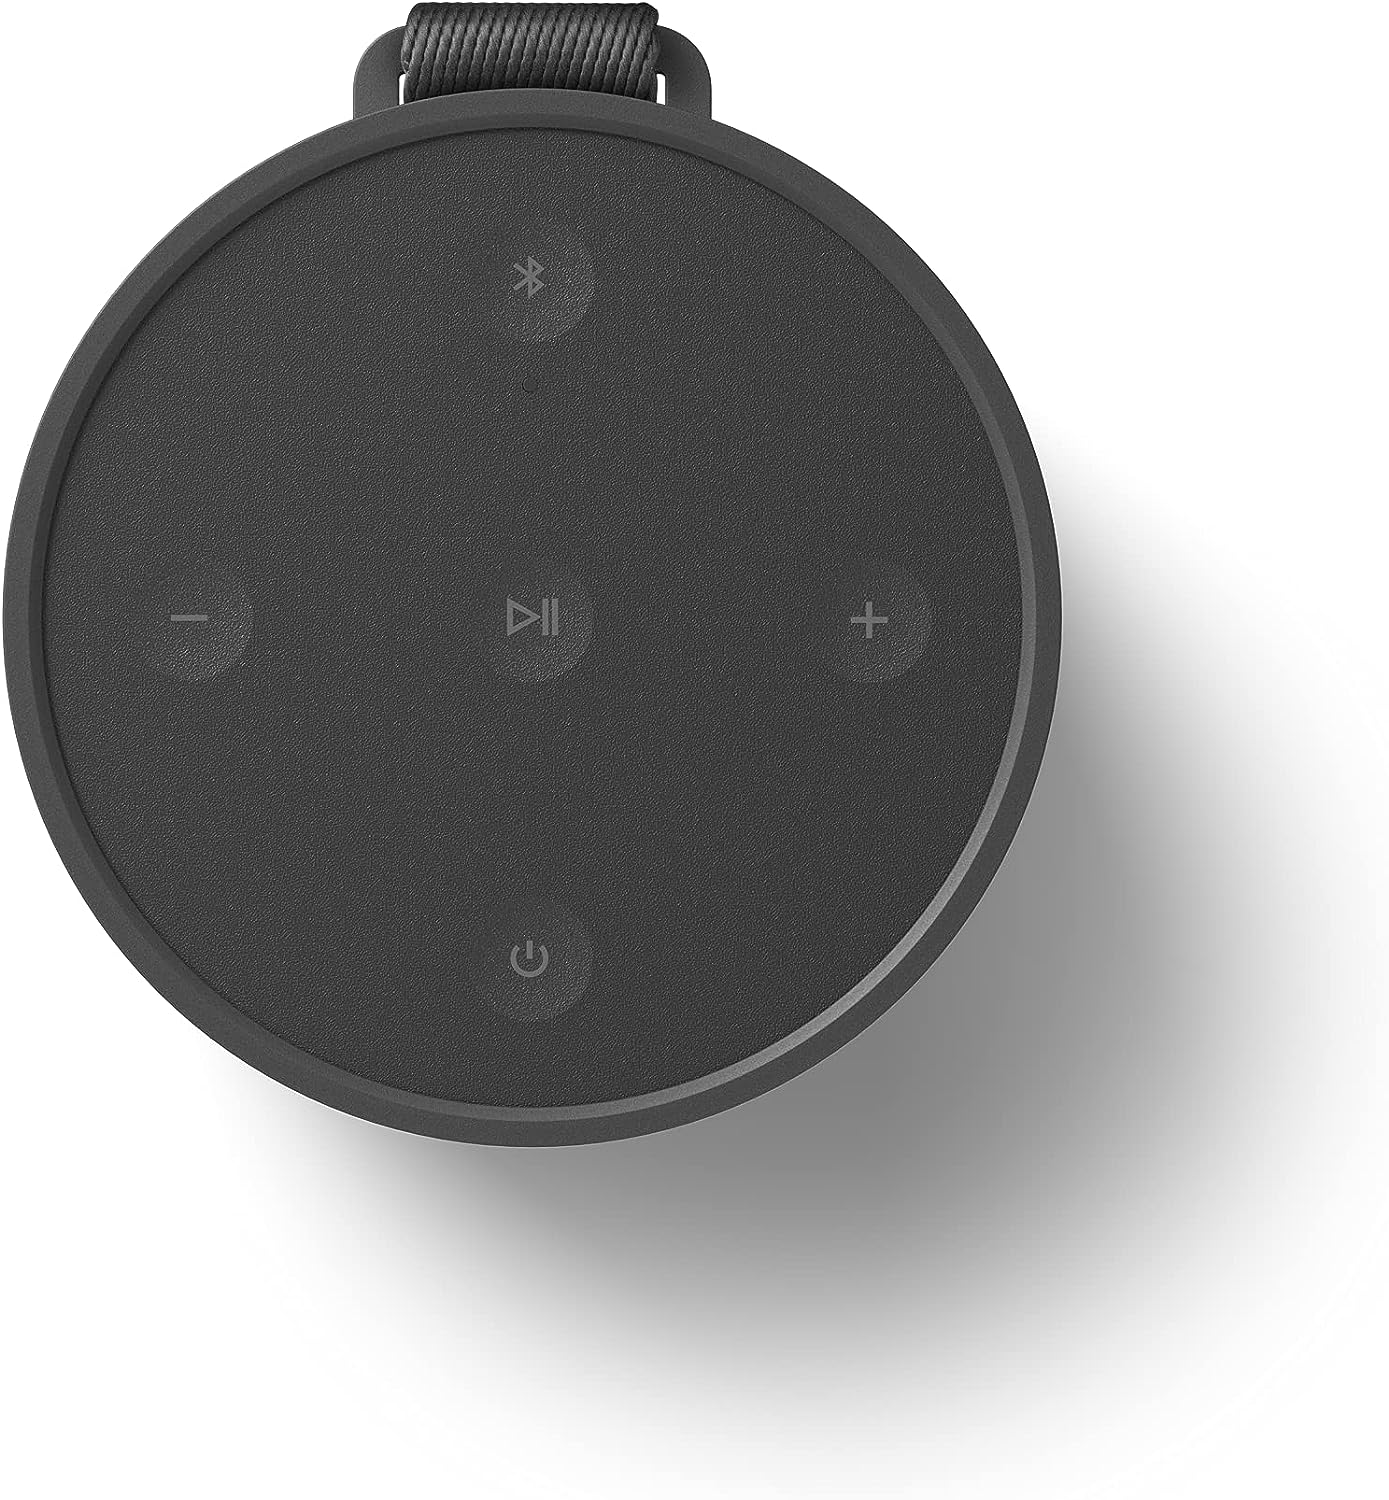 Bang &amp; Olufsen Beosound Explore Wireless Portable Outdoor Speaker - Black (Certified Refurbished)